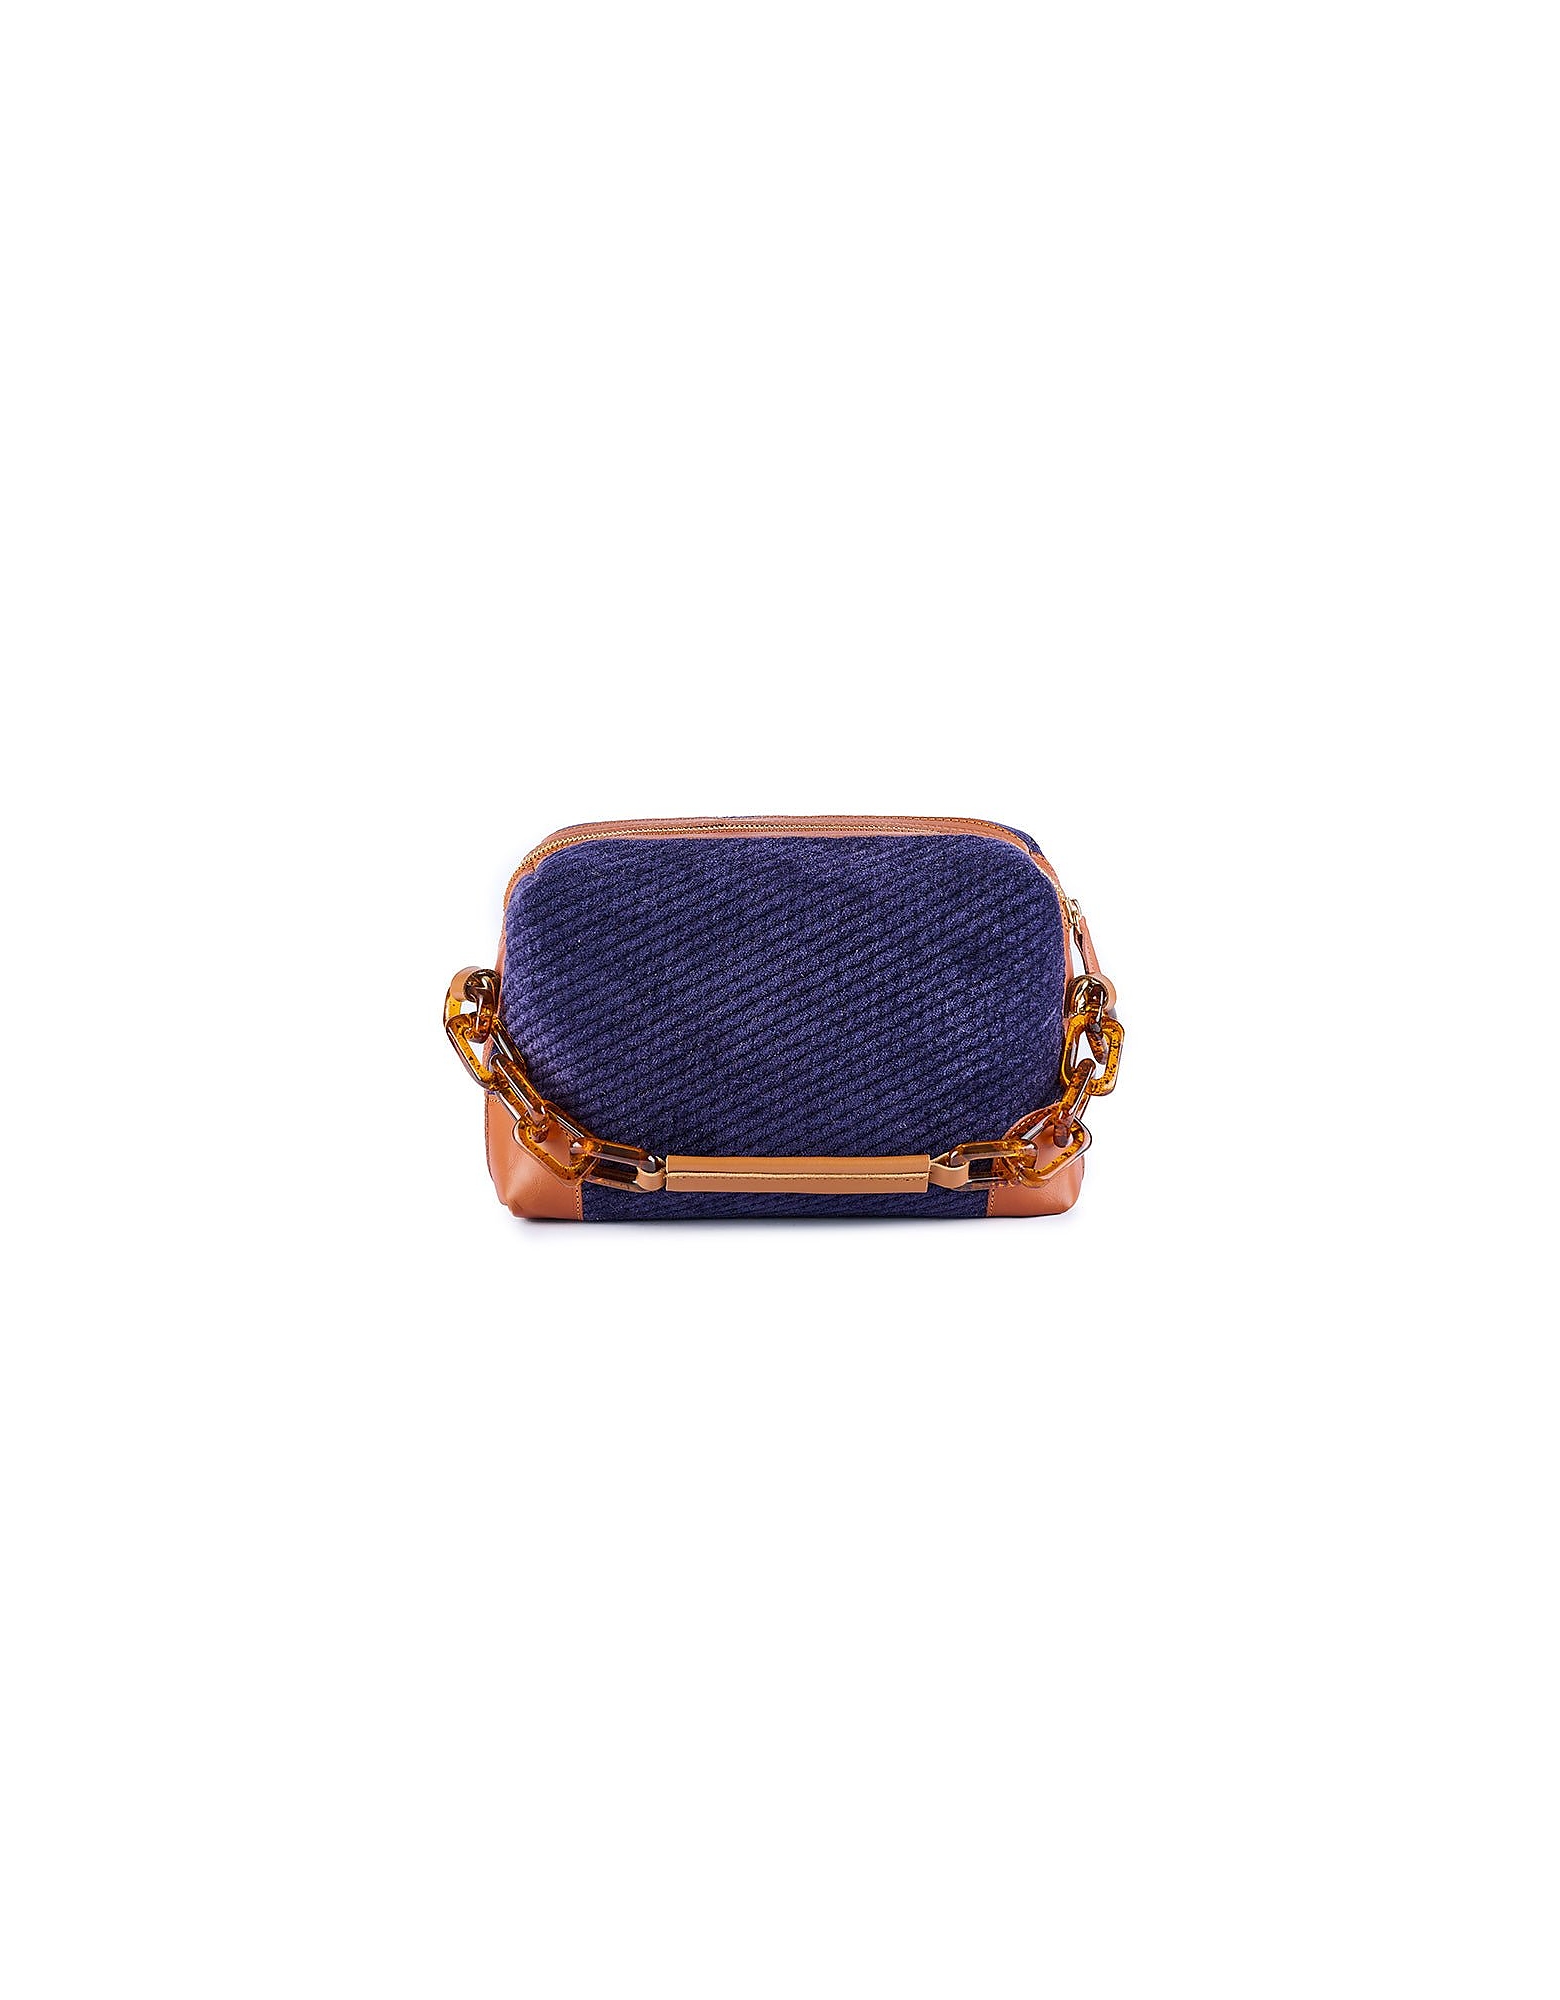 Viamailbag Designer Handbags Stresa Stone - Crossbody Bag In Bleu